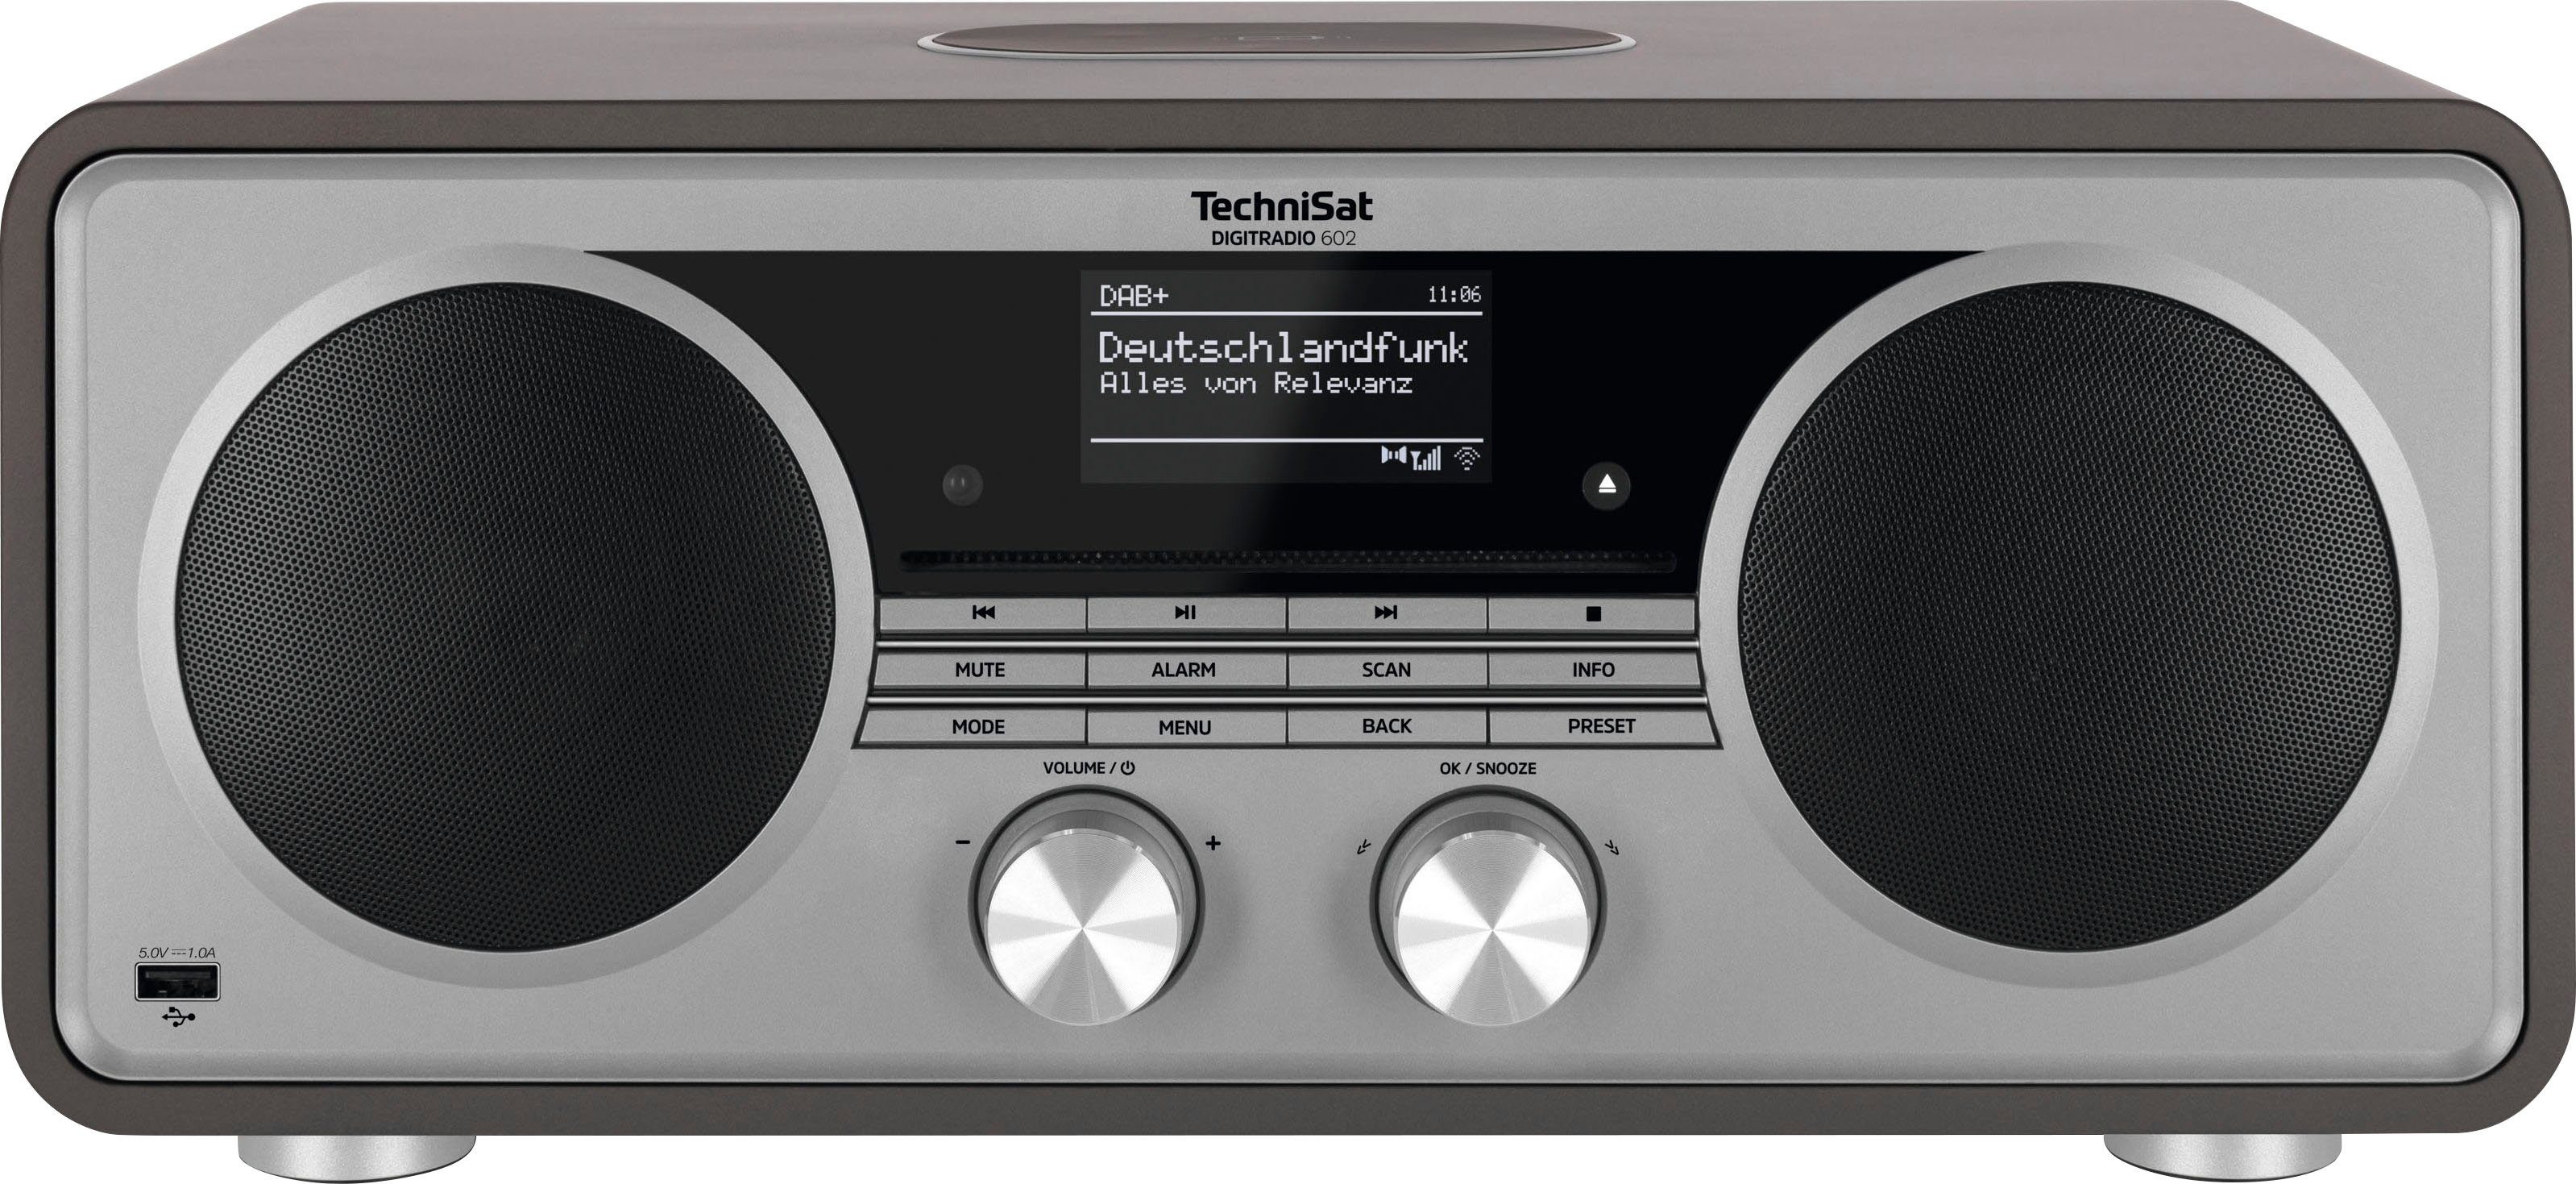 W, mit RDS, DIGITRADIO Anthrazit/Silber (DAB), CD-Player) (Digitalradio 70 Stereoanlage, Internet-Radio TechniSat UKW 602